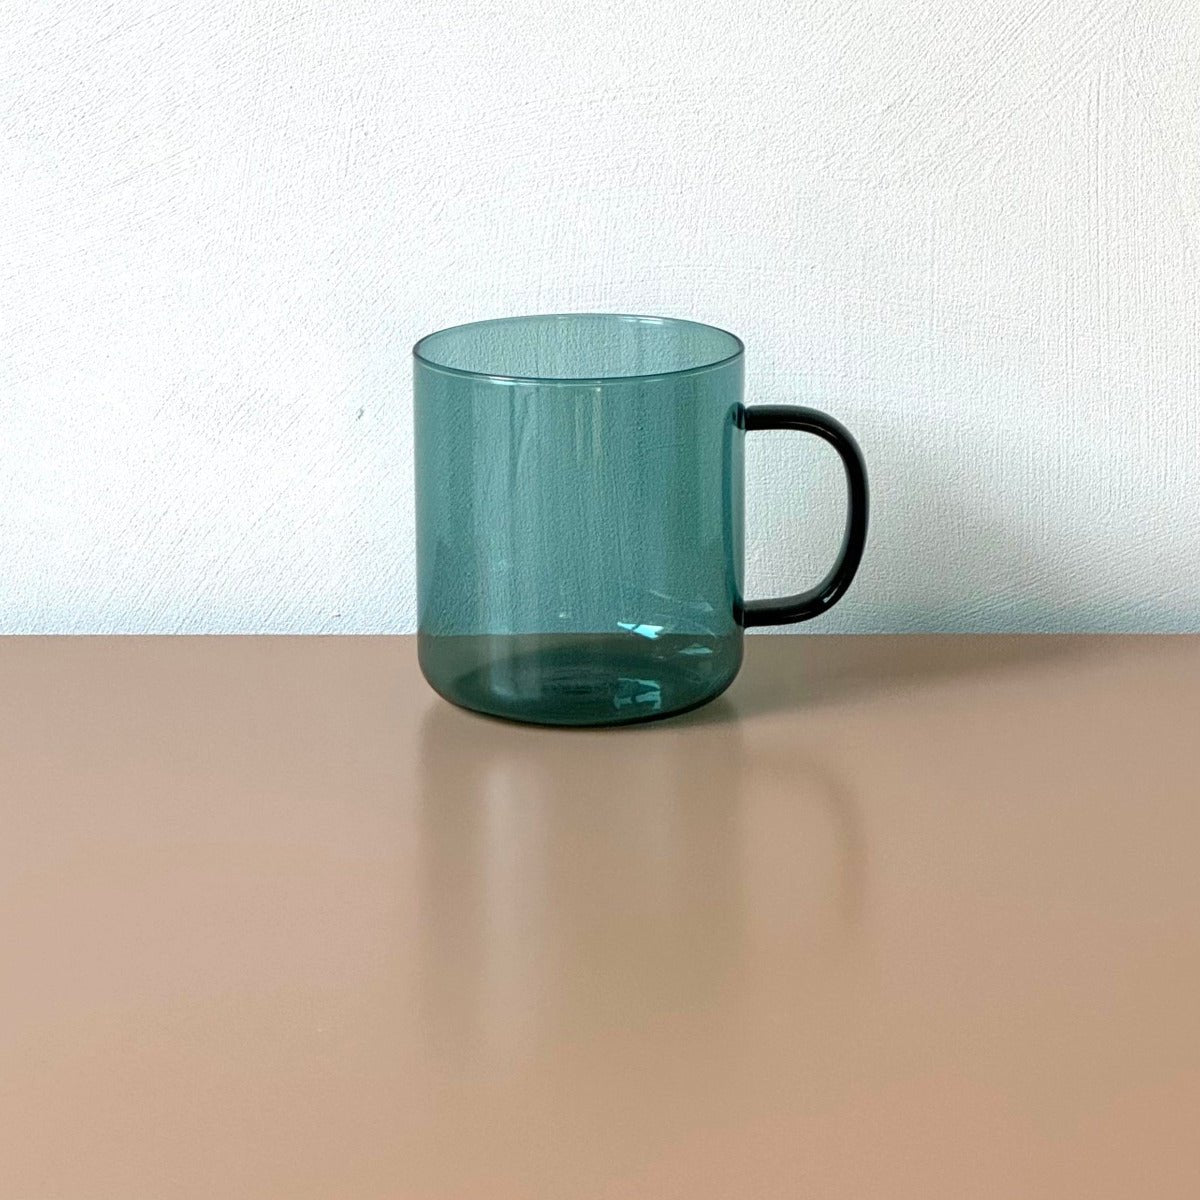 DANSKshop - Glass Mug - Kitchenware - DANSKmadeforrooms